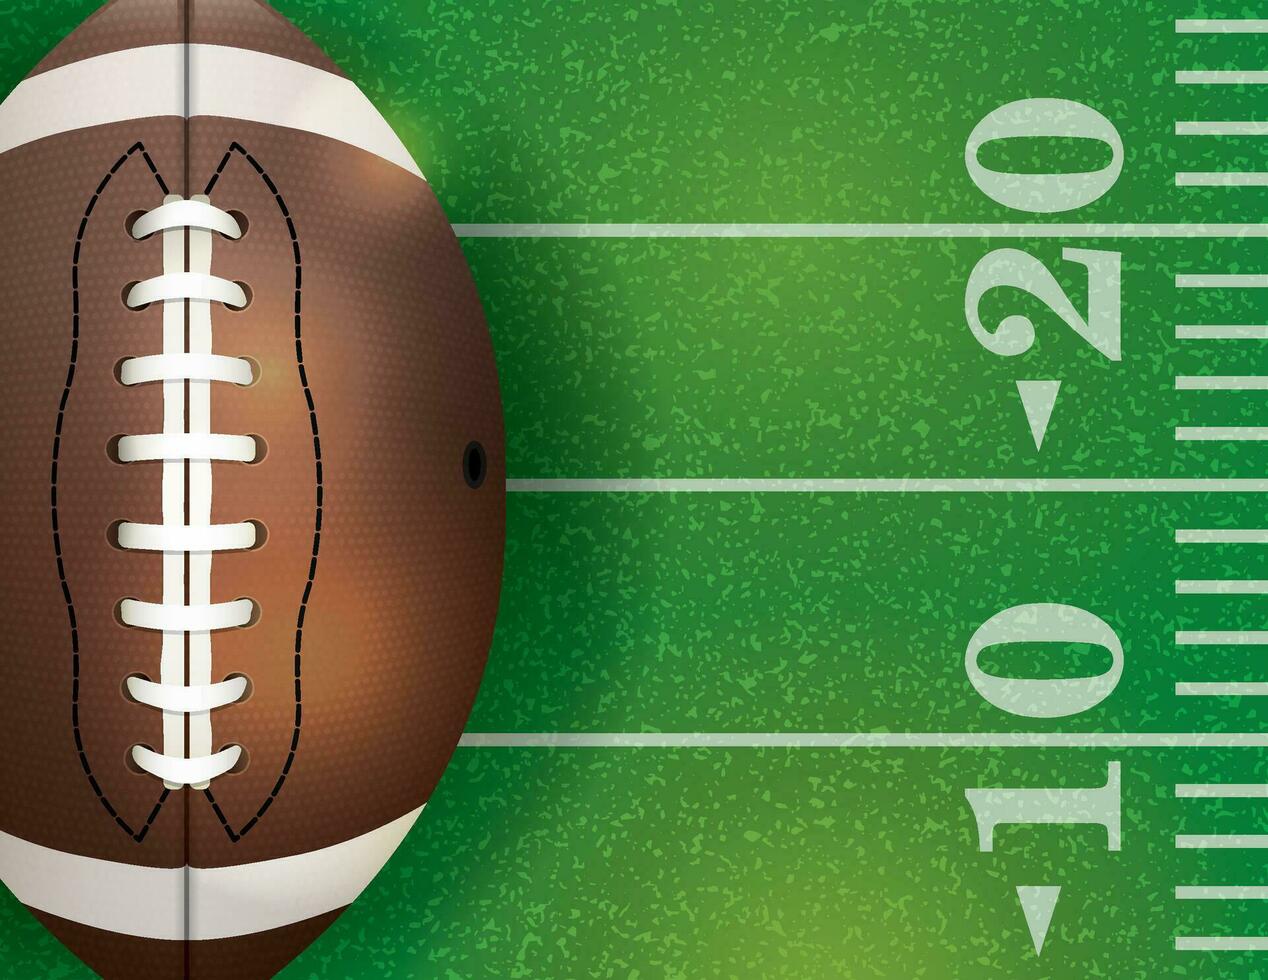 American Football Ball and Field Illustration vector